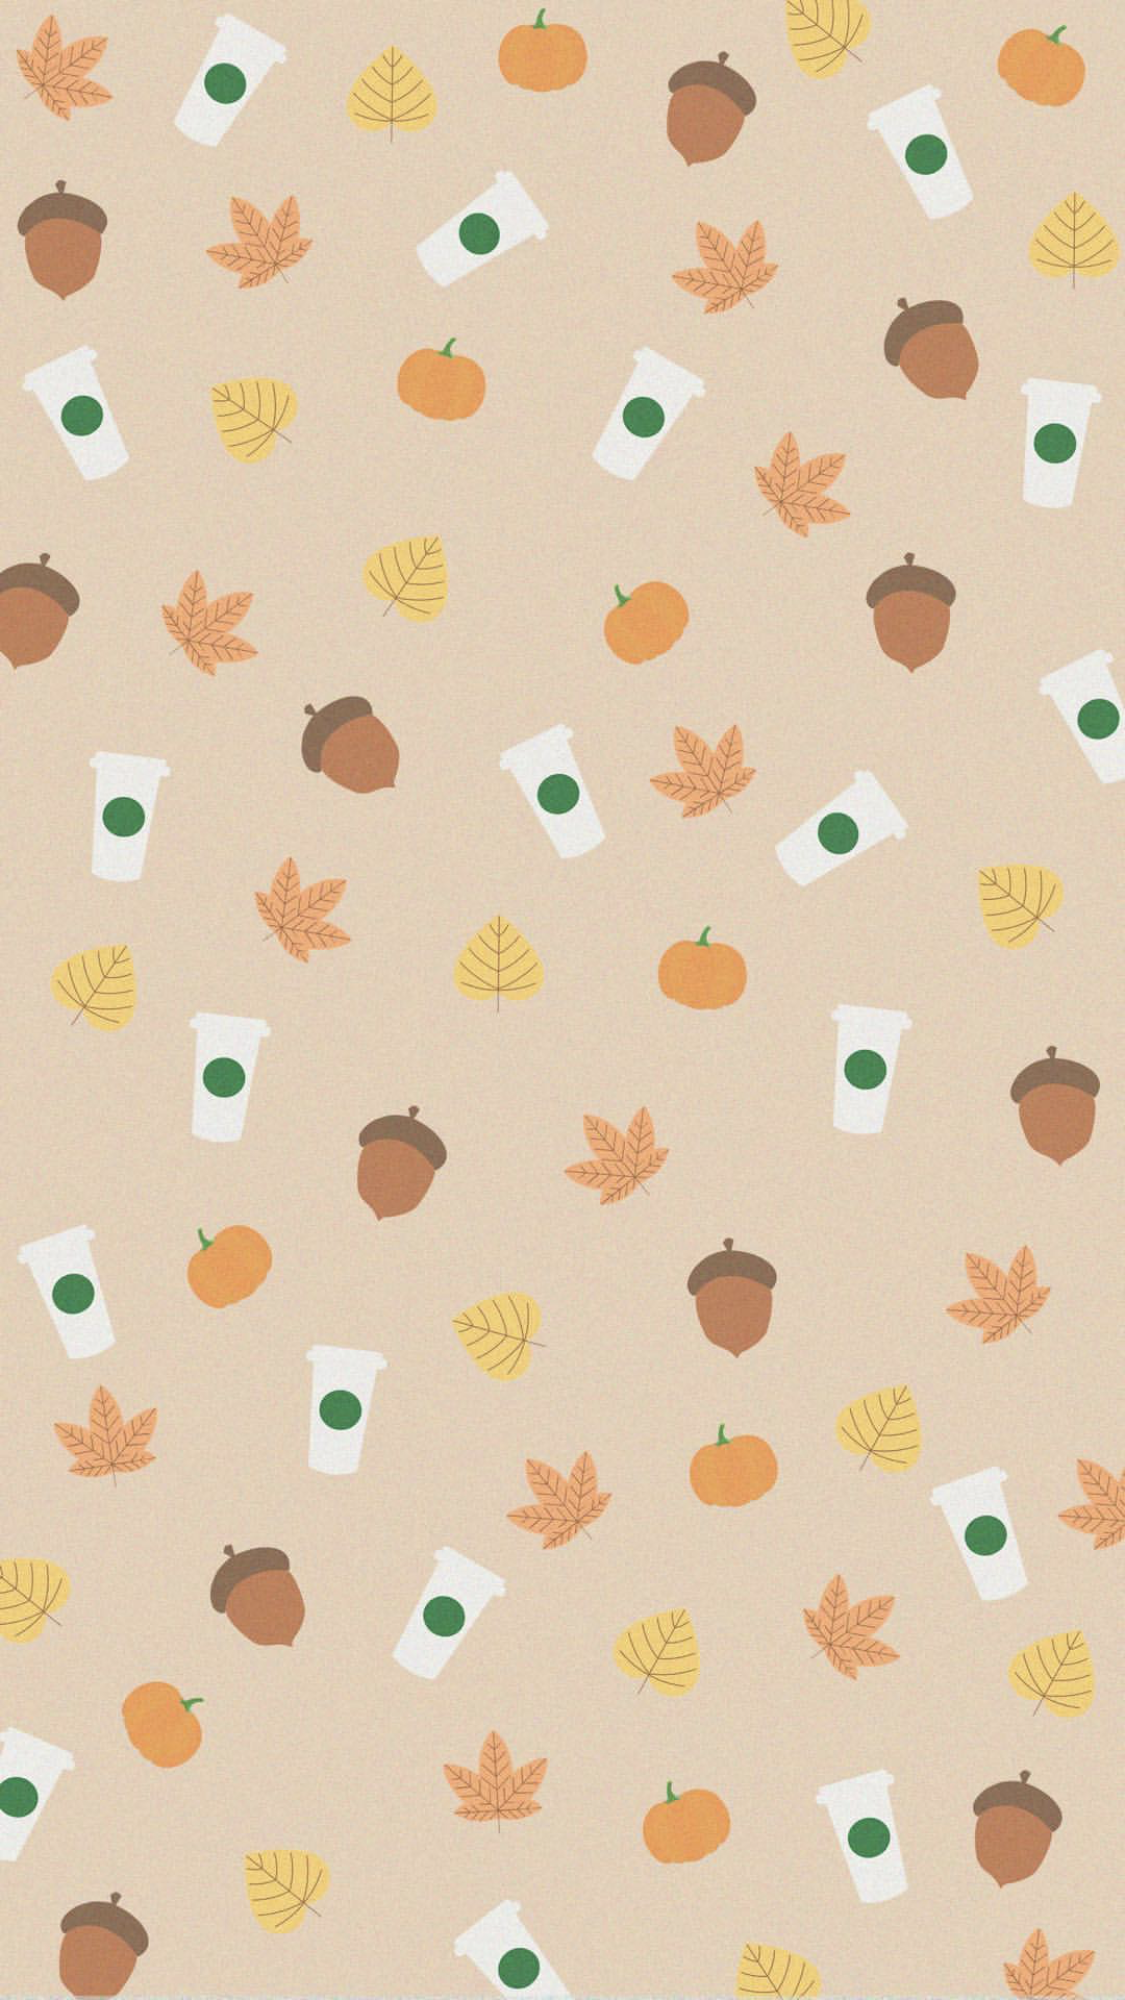 Starbucks background fall autumn wallpaper Iphone wallpaper fall